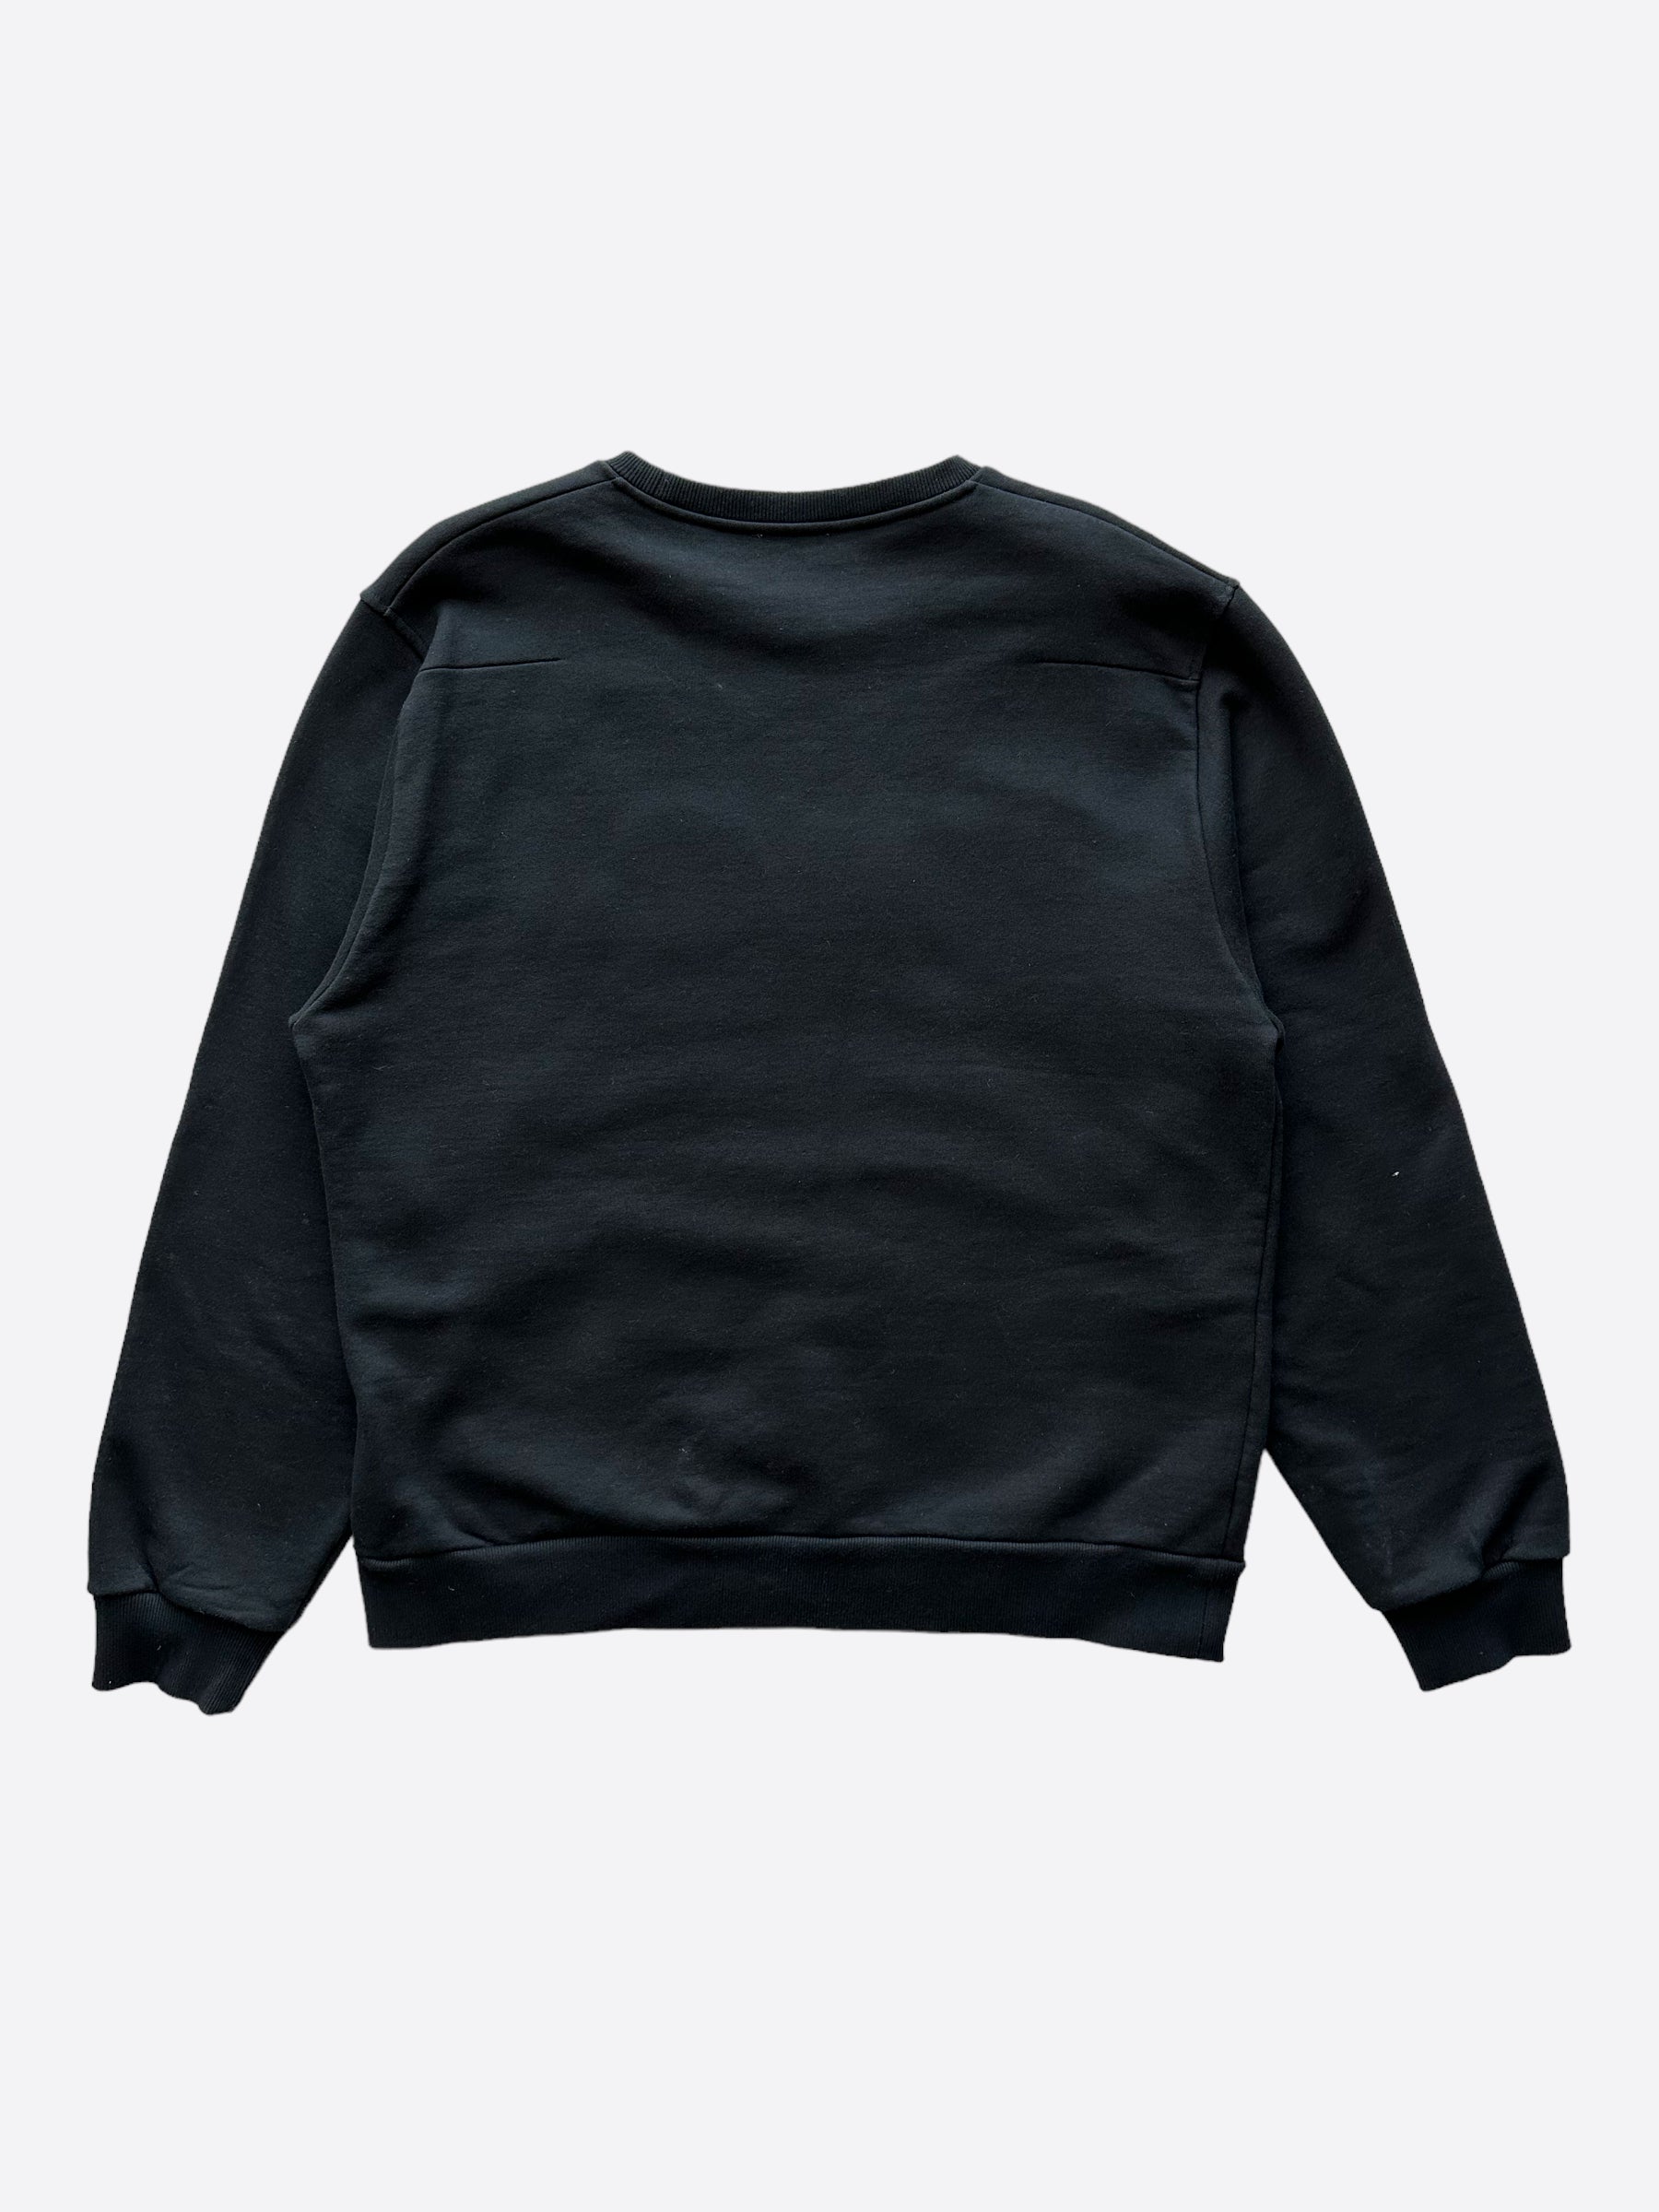 Dior Kaws Black Logo Sweater